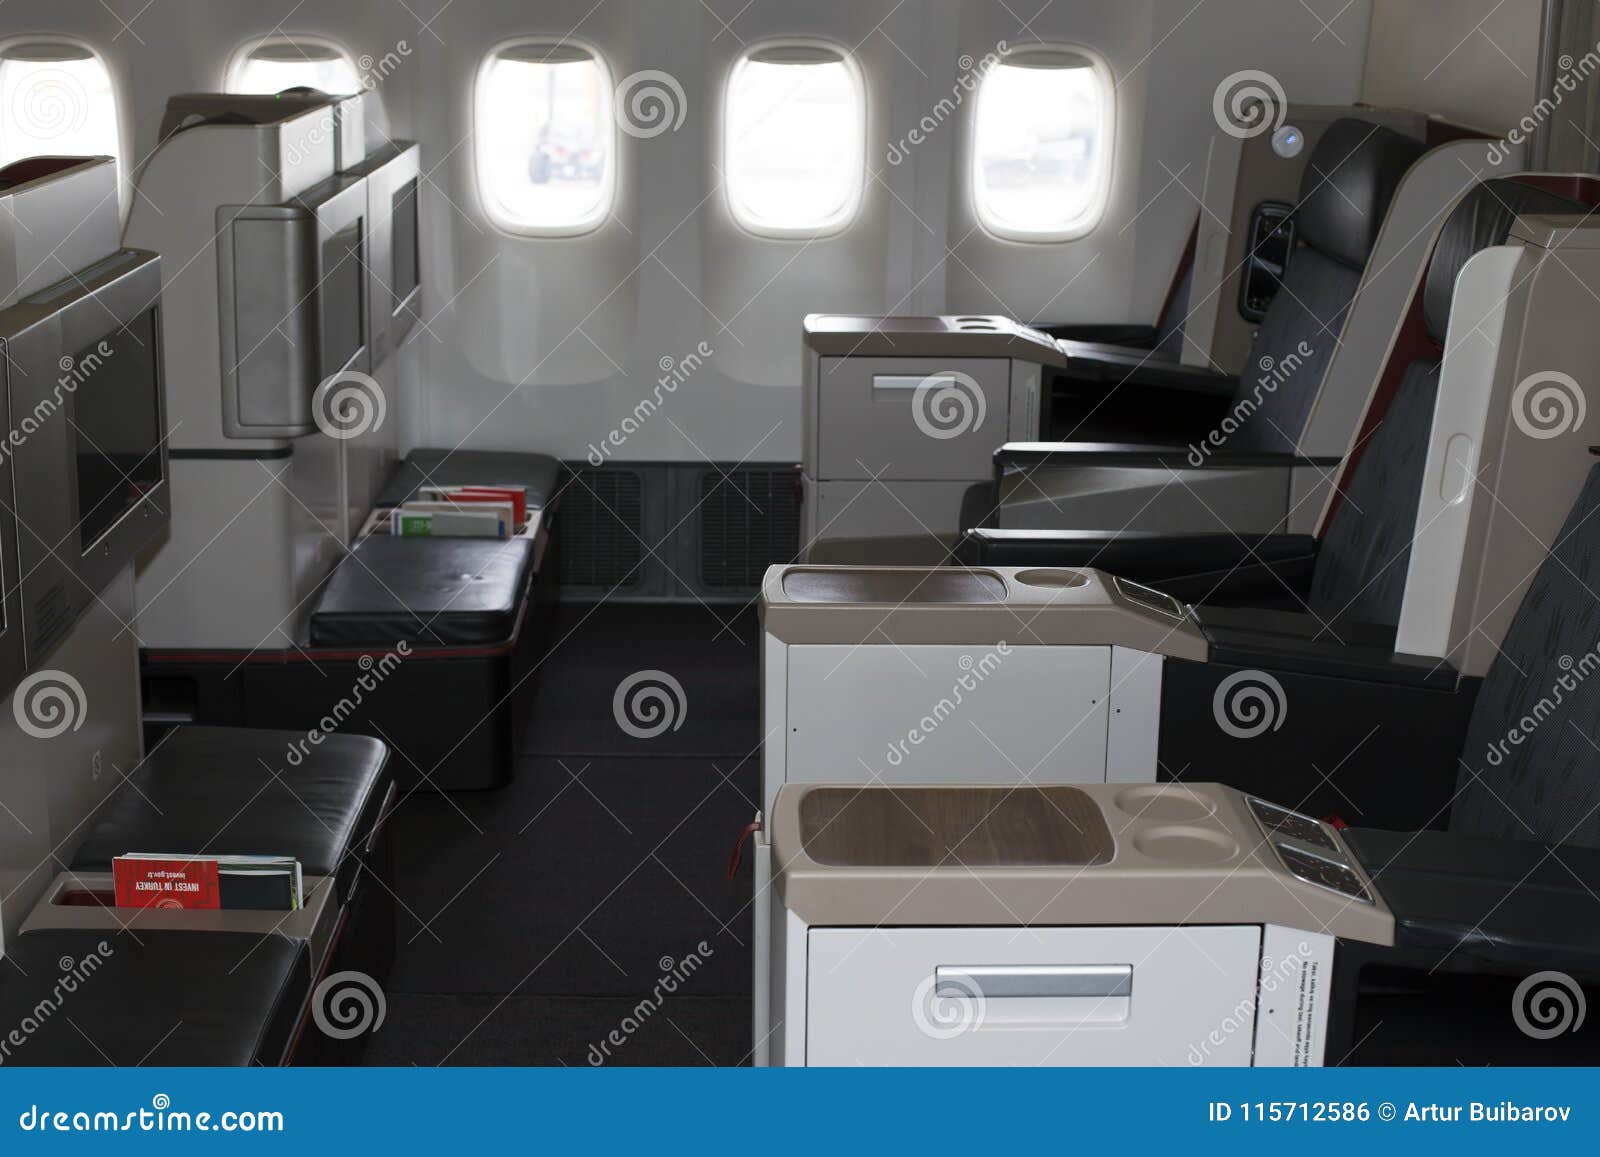 Tc Lja Turkish Airlines Boeing 777 300er Business Class